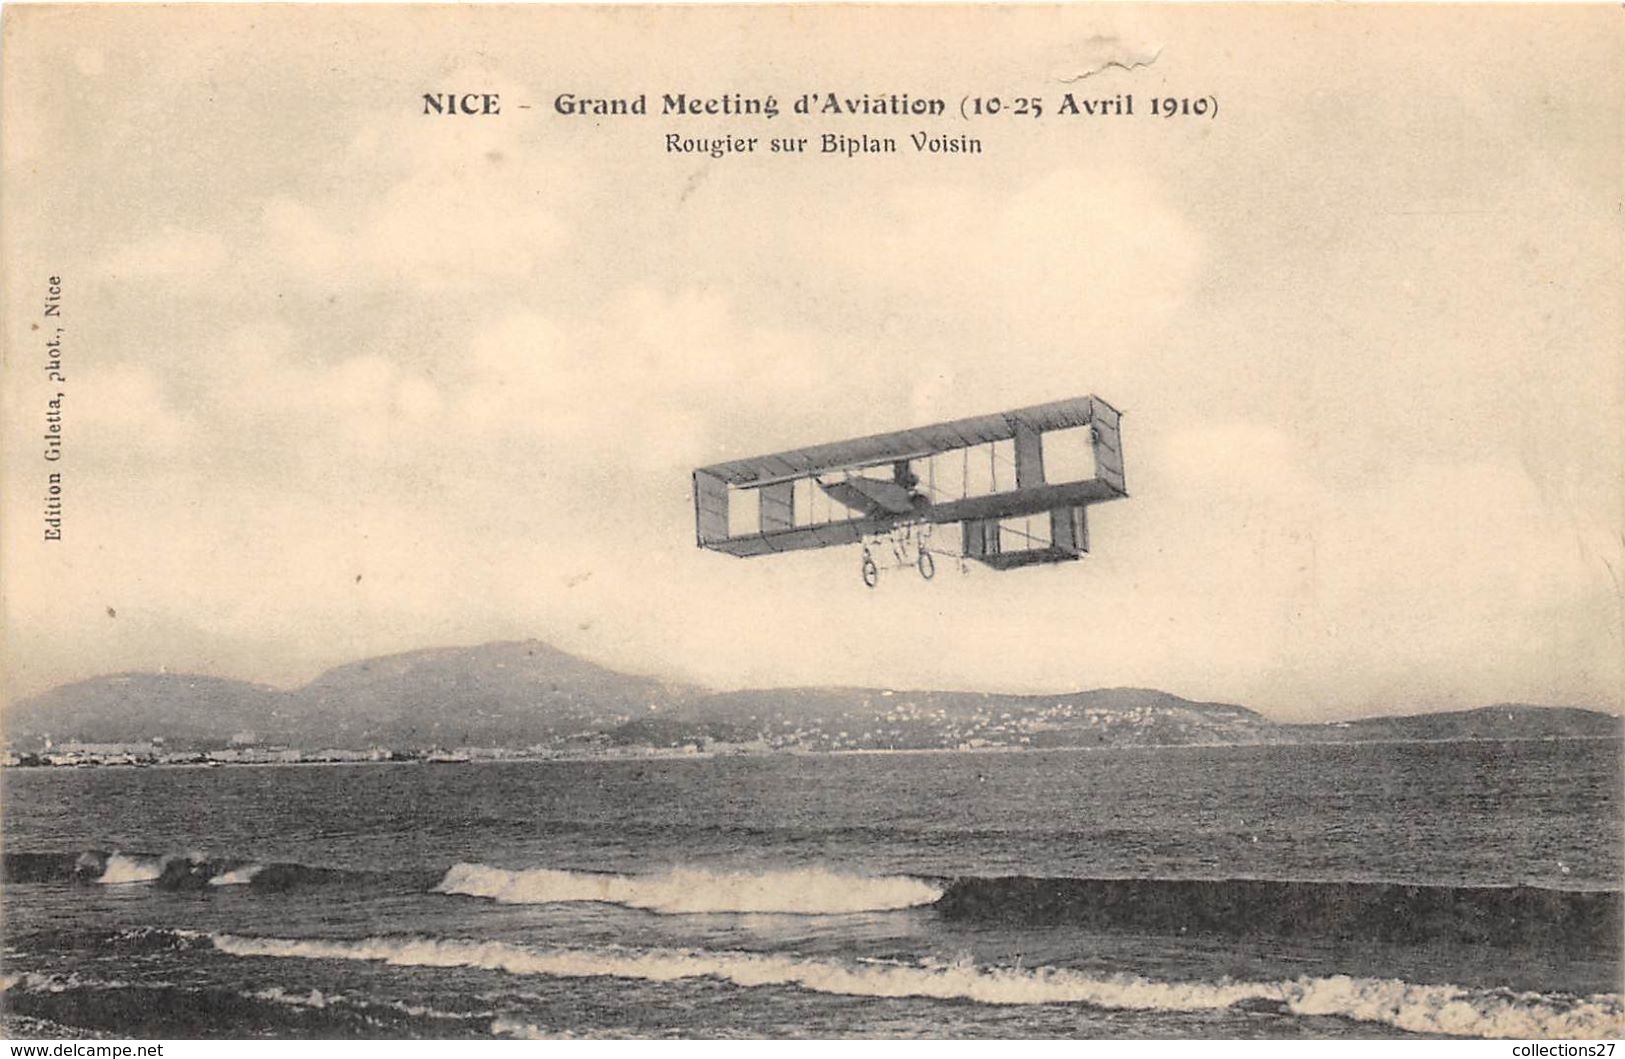 06-NICE- GRAND MEETING D'AVIATION, 10-25 AVRIEL 1910 - ROUGIER SUR BIPLAN VOISIN - Mercati, Feste